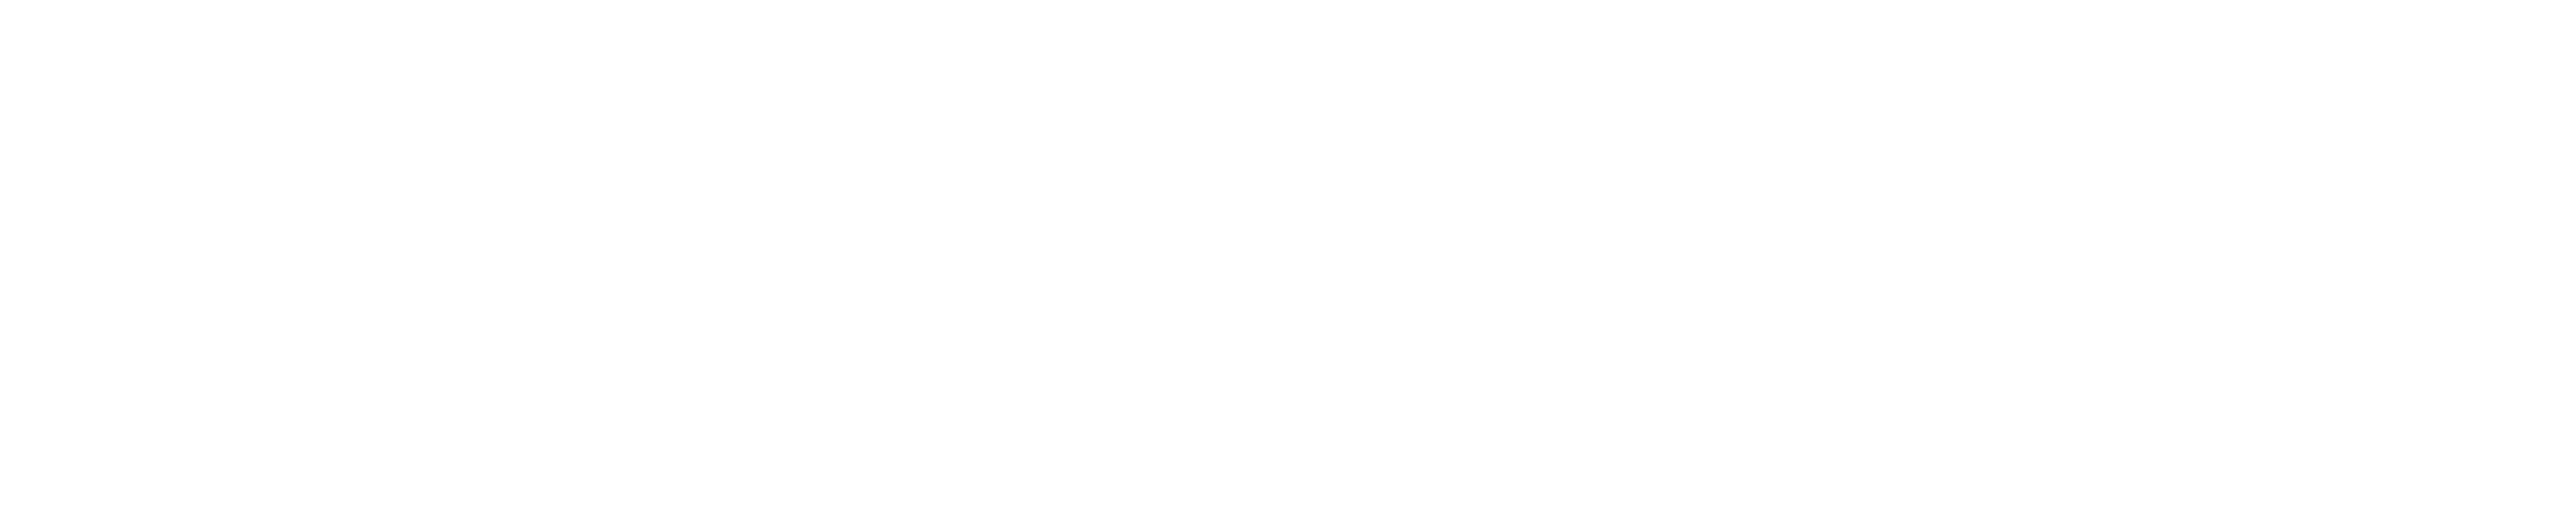 Demandbase_Logo.png